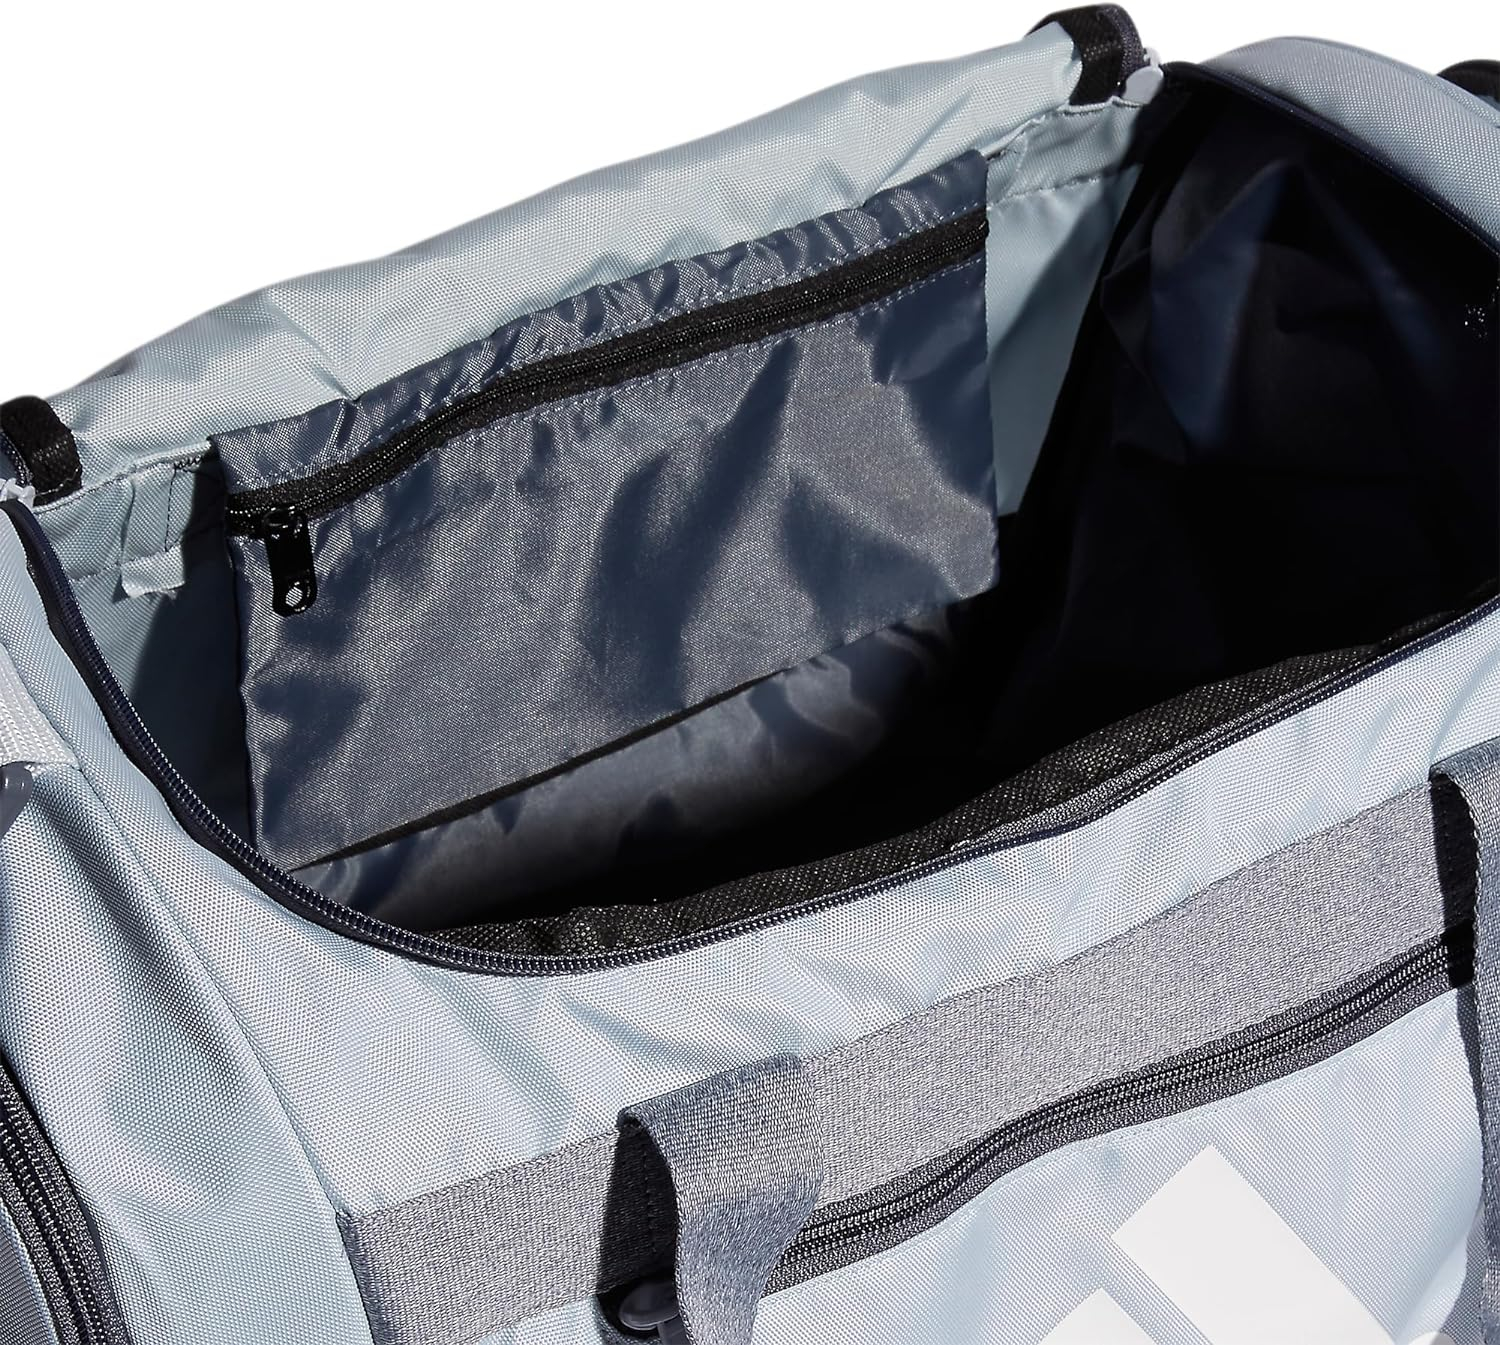 adidas Unisex Defender 4 Small Duffel Bag